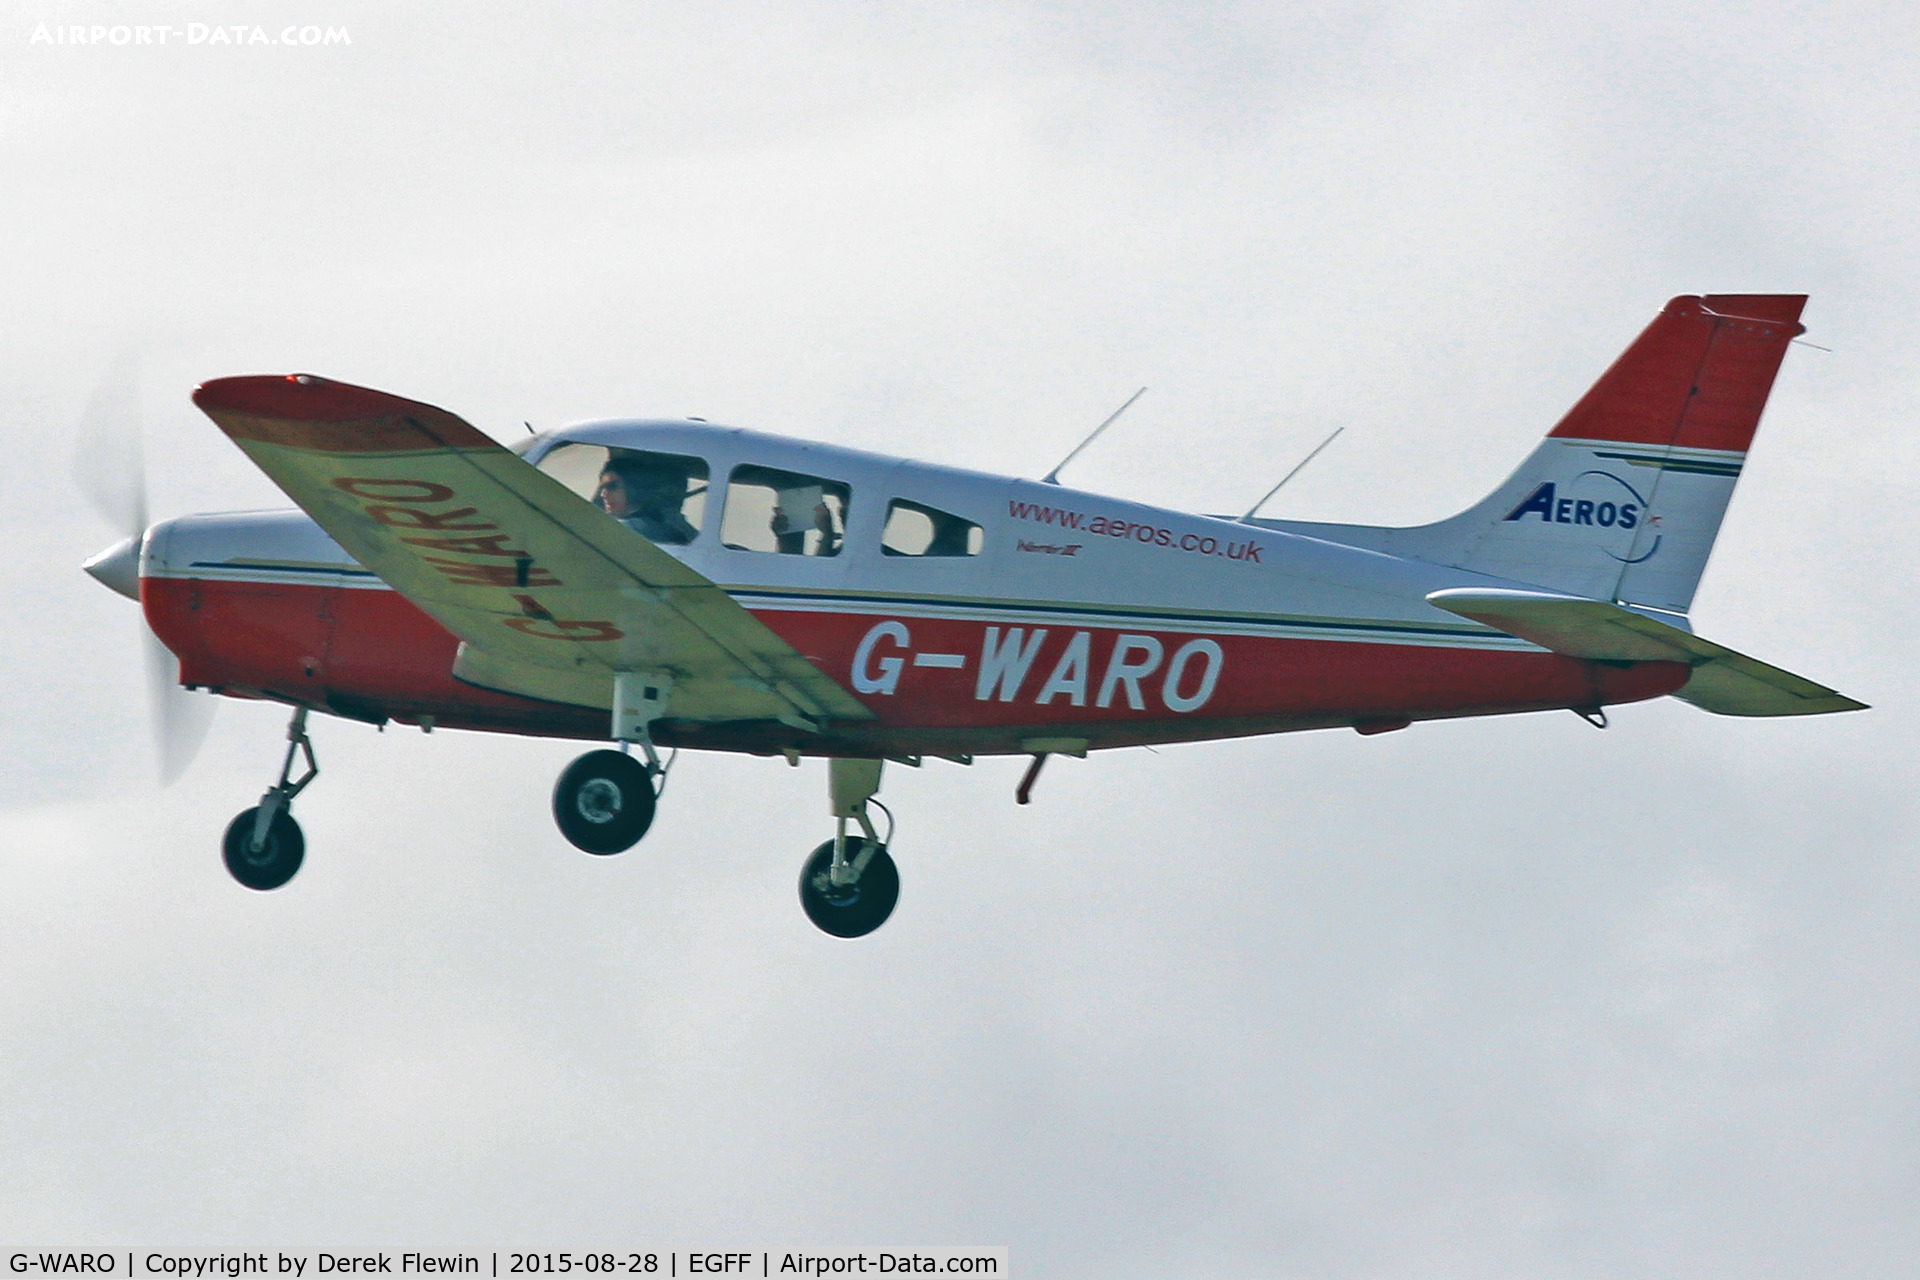 G-WARO, 1997 Piper PA-28-161 Cherokee Warrior III C/N 28-42015, Cherokee Warrior III, Aeros, Staverton based, previously N9246, G-WARO, EC-HVT, seen departing runway 22, en-route RTB.